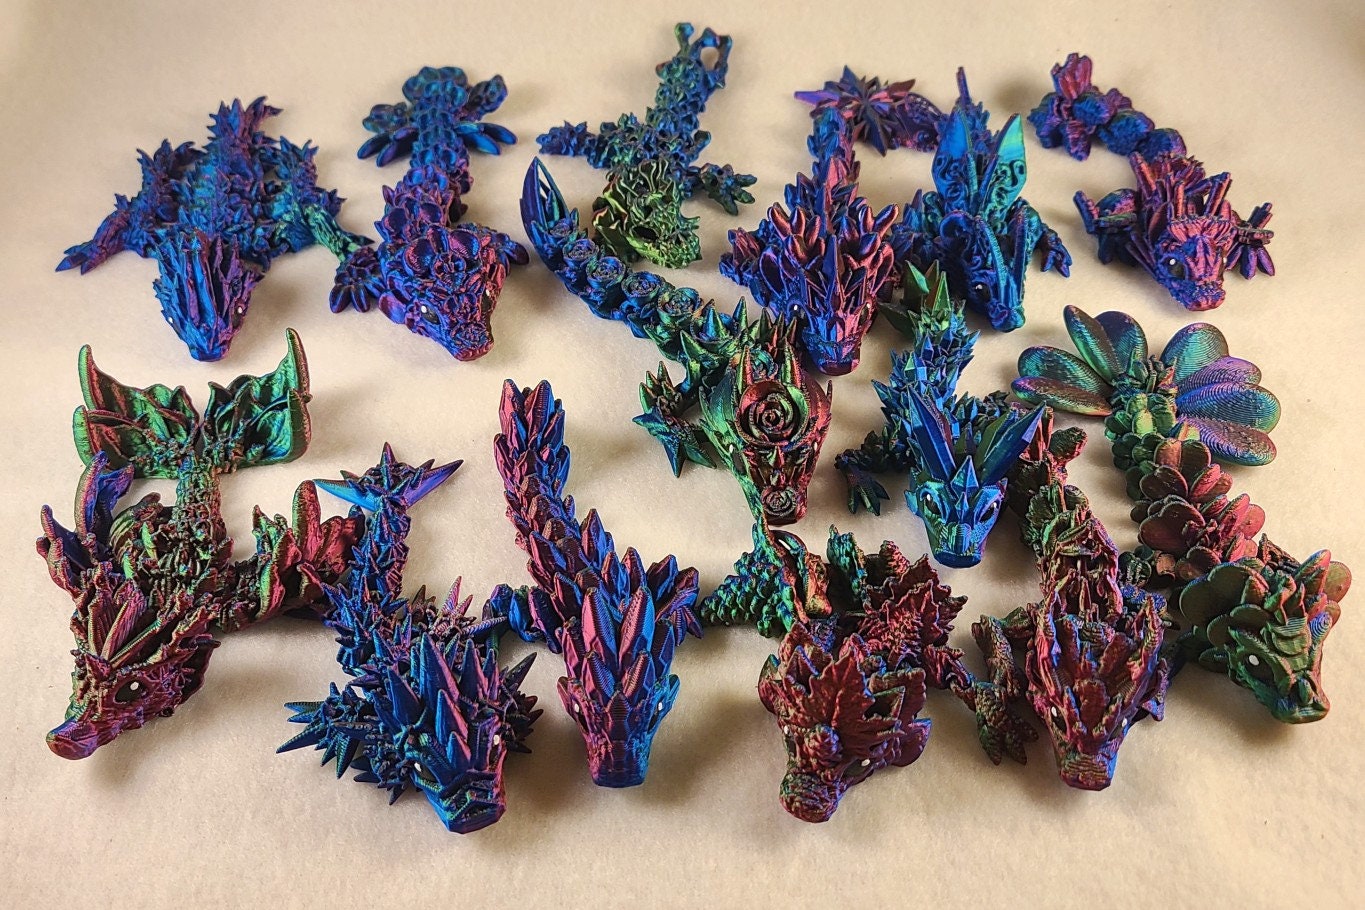 Make a Mosaic Starfish Craft Kit - Ocean Creatures - Under The Sea